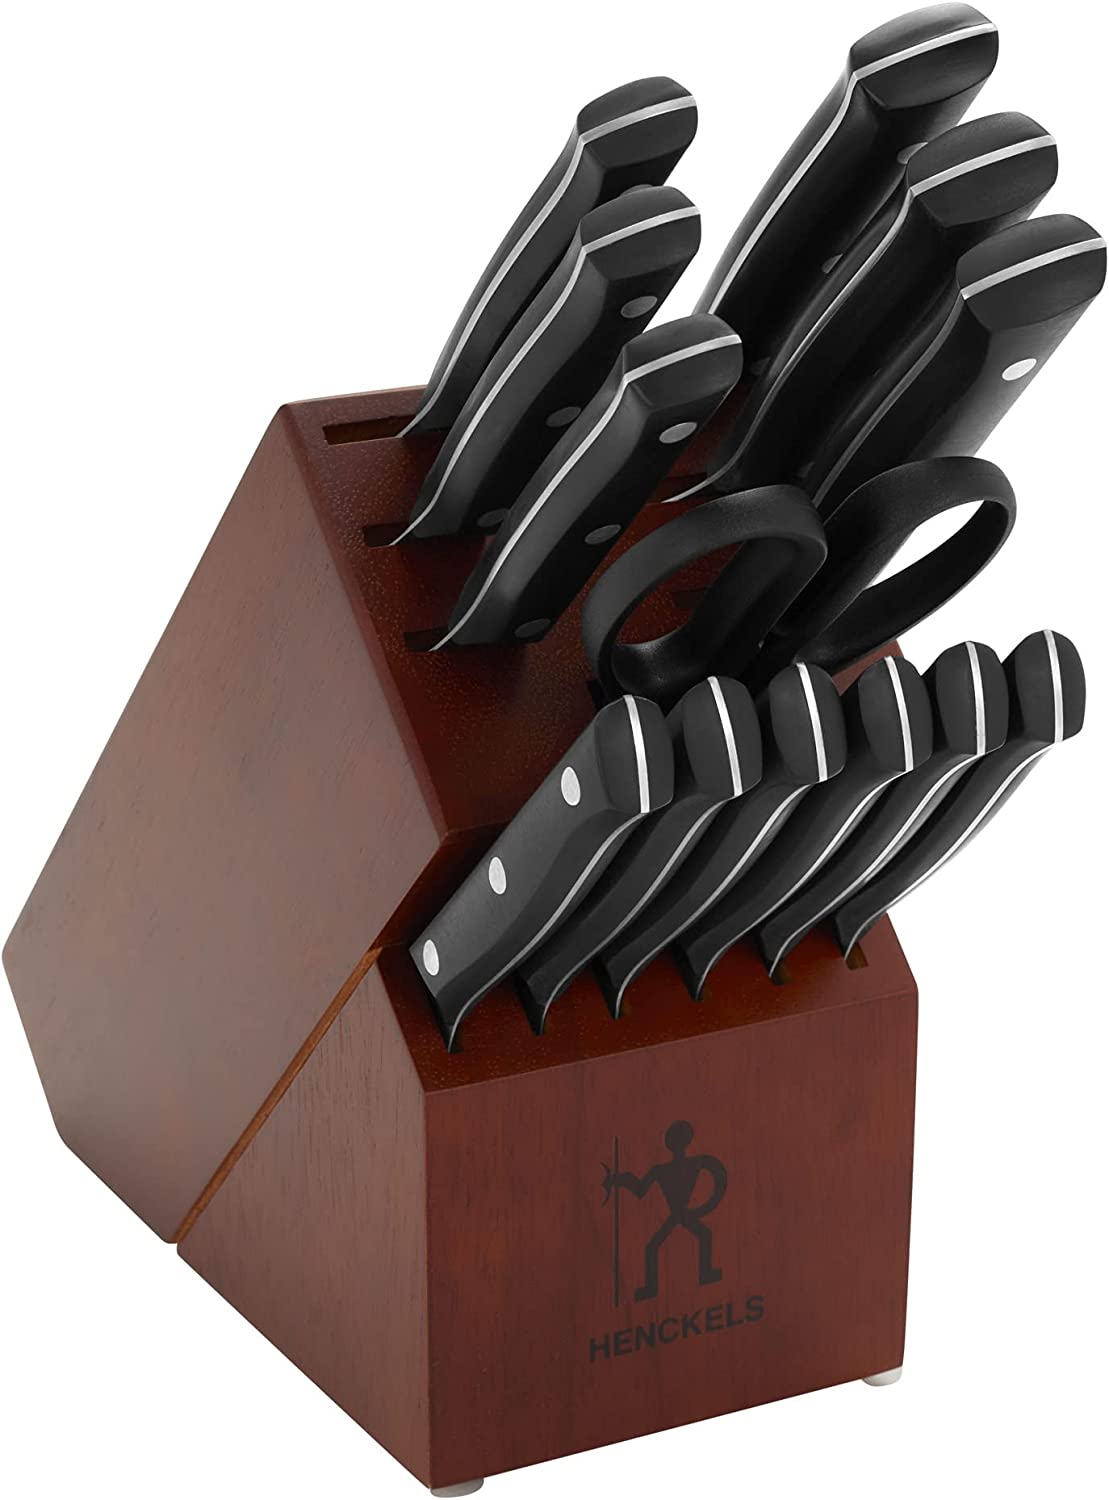 Henckels H17610-014 Everedge Dynamic 14 Piece Knife Set Block, Black